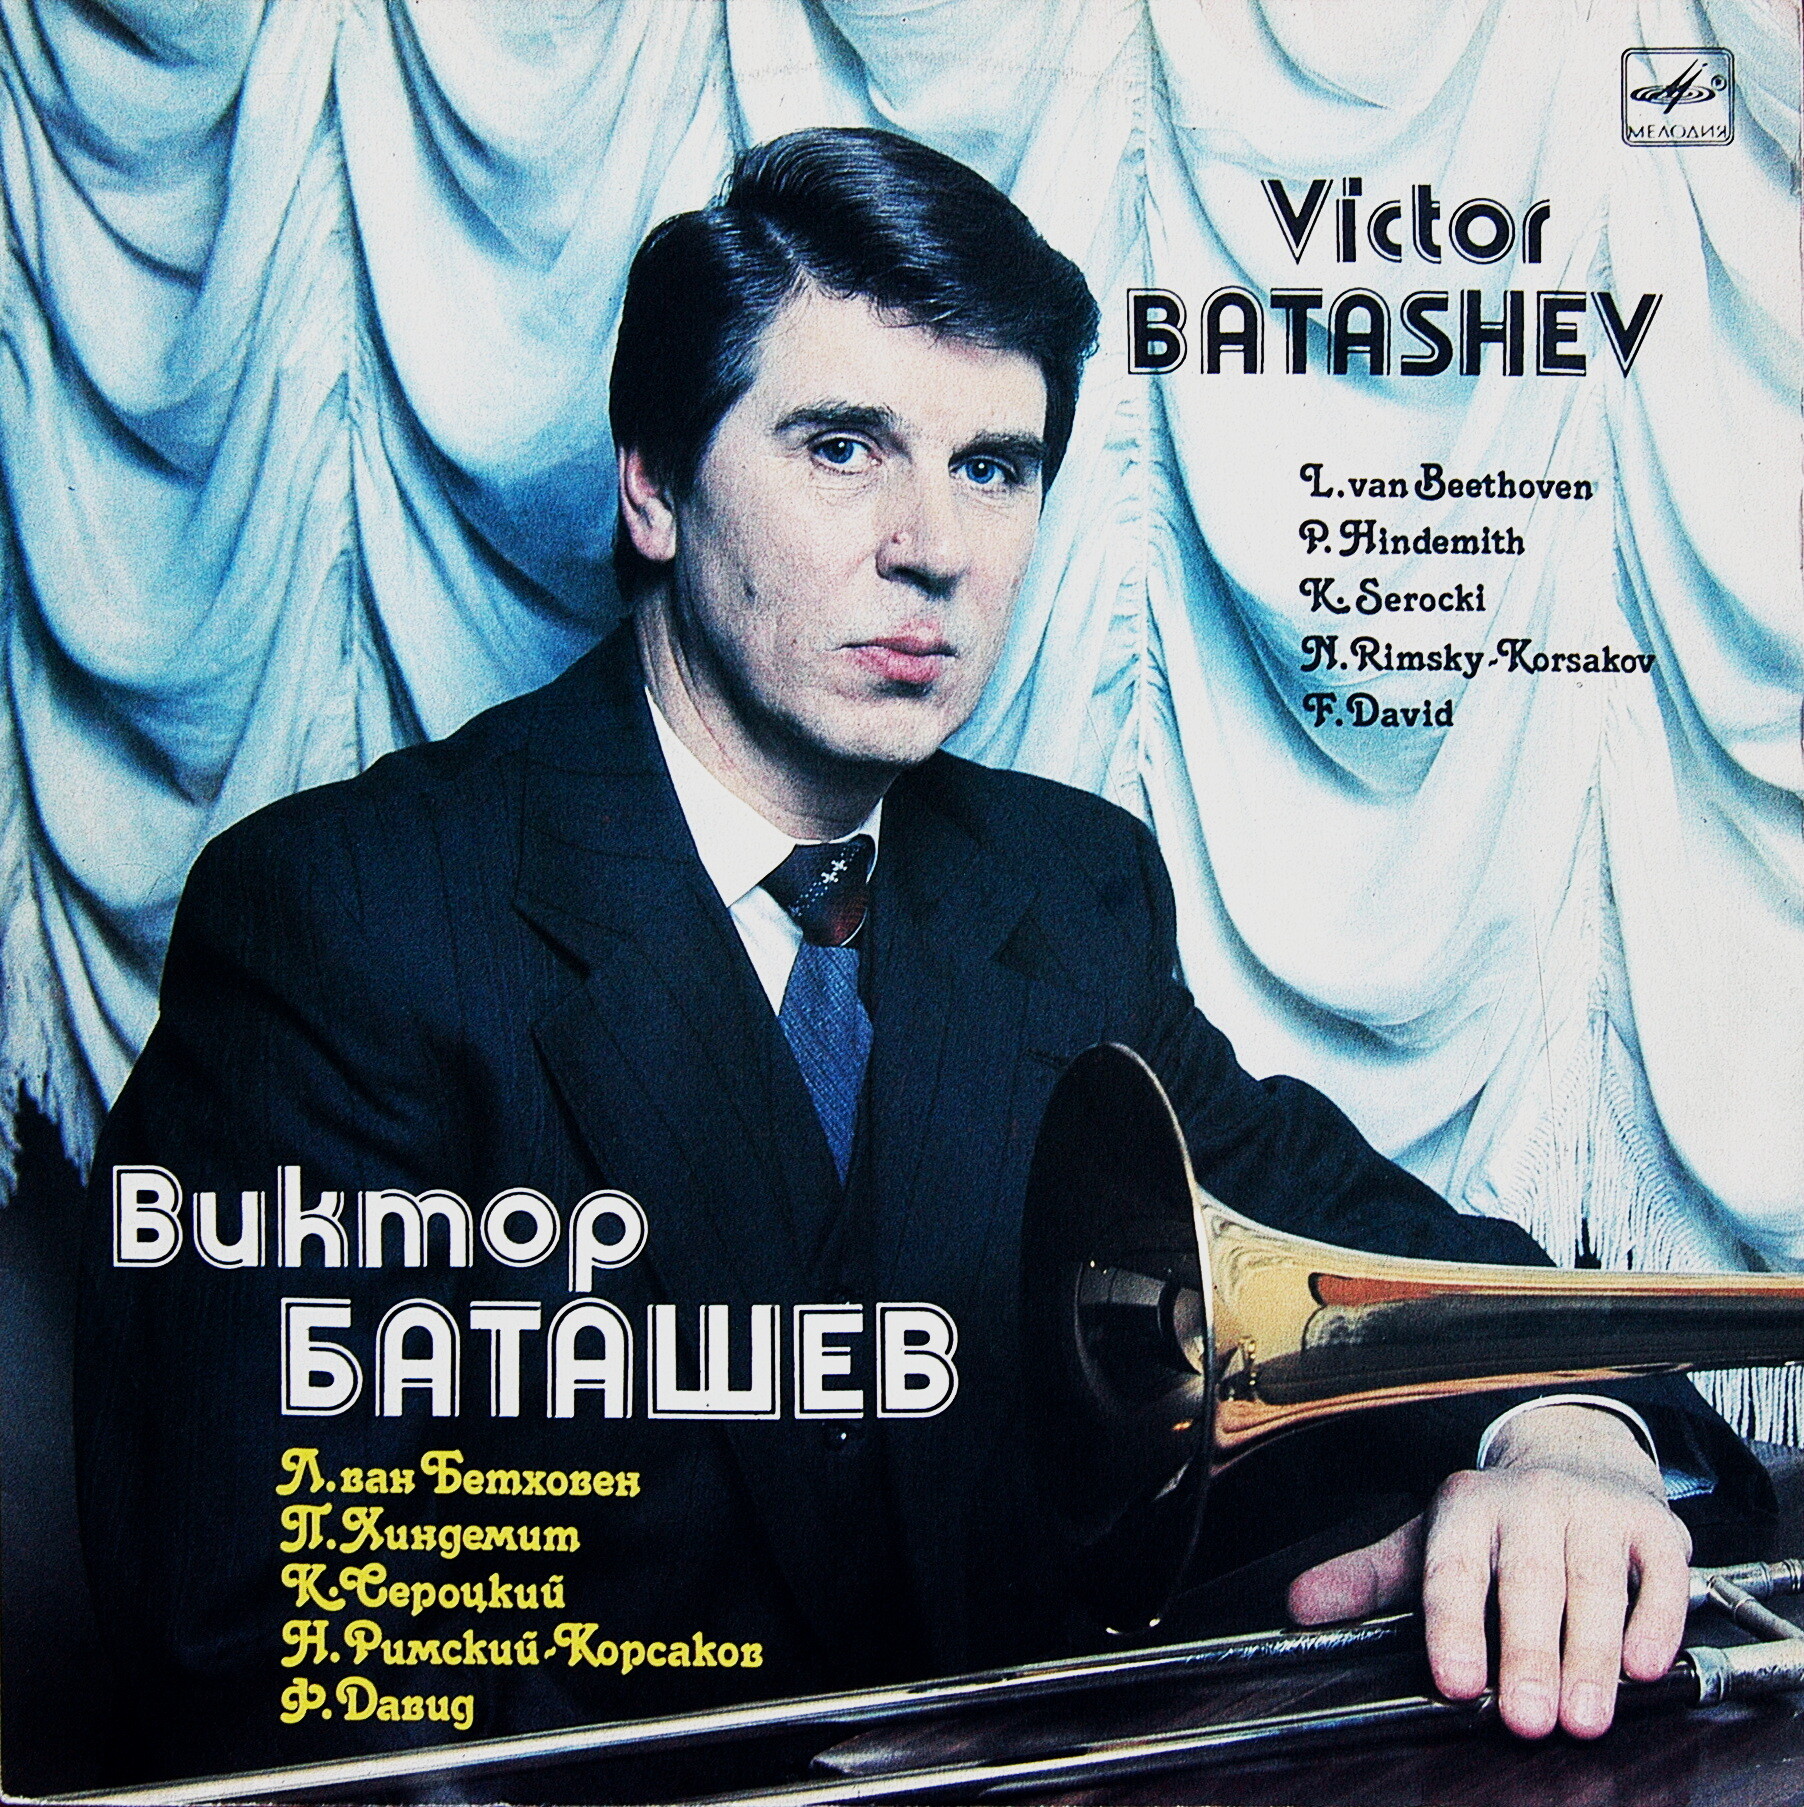 Виктор БАТАШЕВ (тромбон)